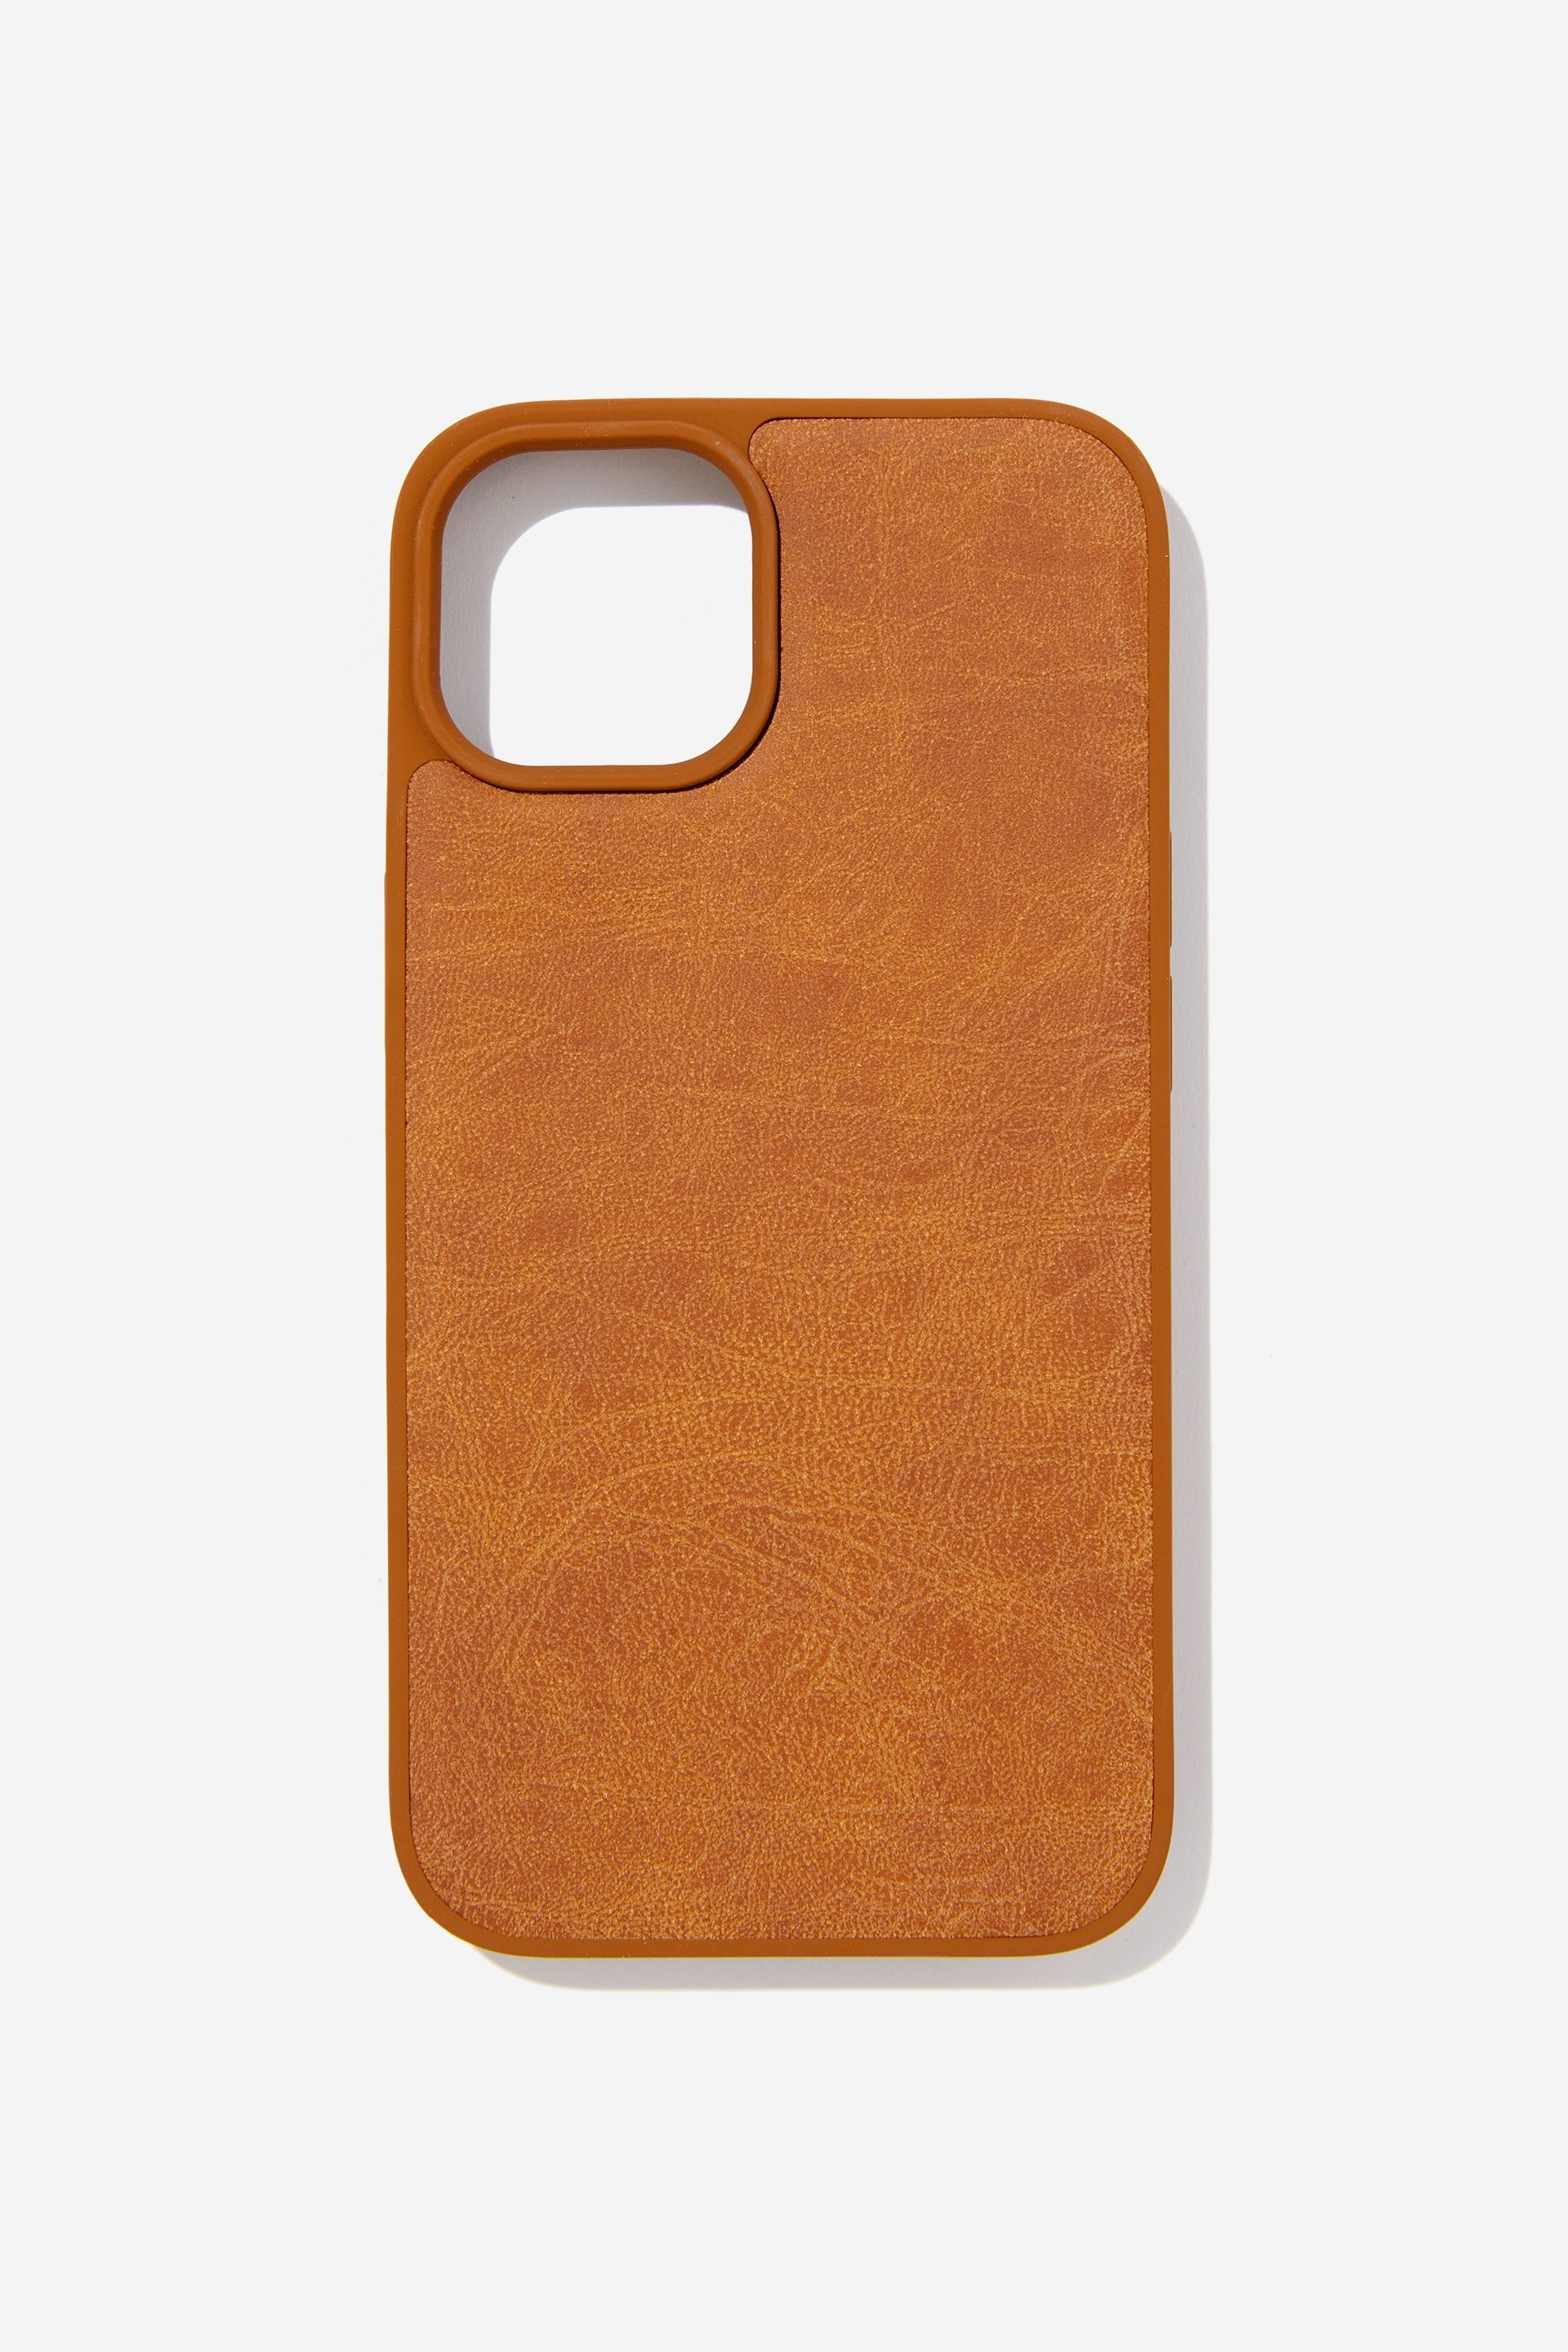 Typo - Buffalo Phone Case Iphone 13-14 - Mid tan